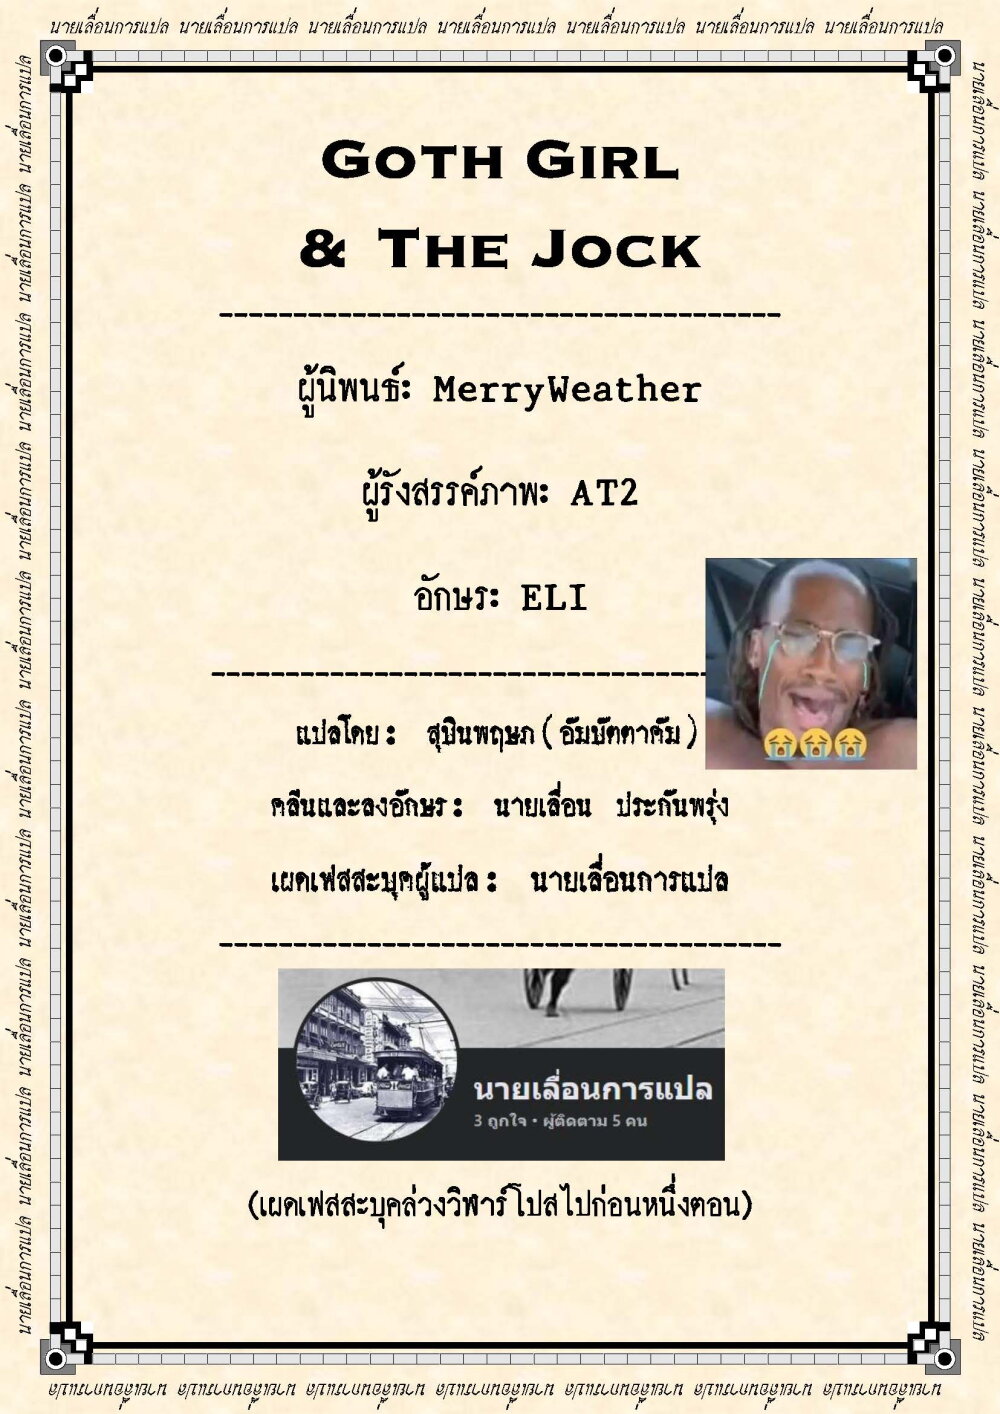 Goth Girl & The Jock 20 12